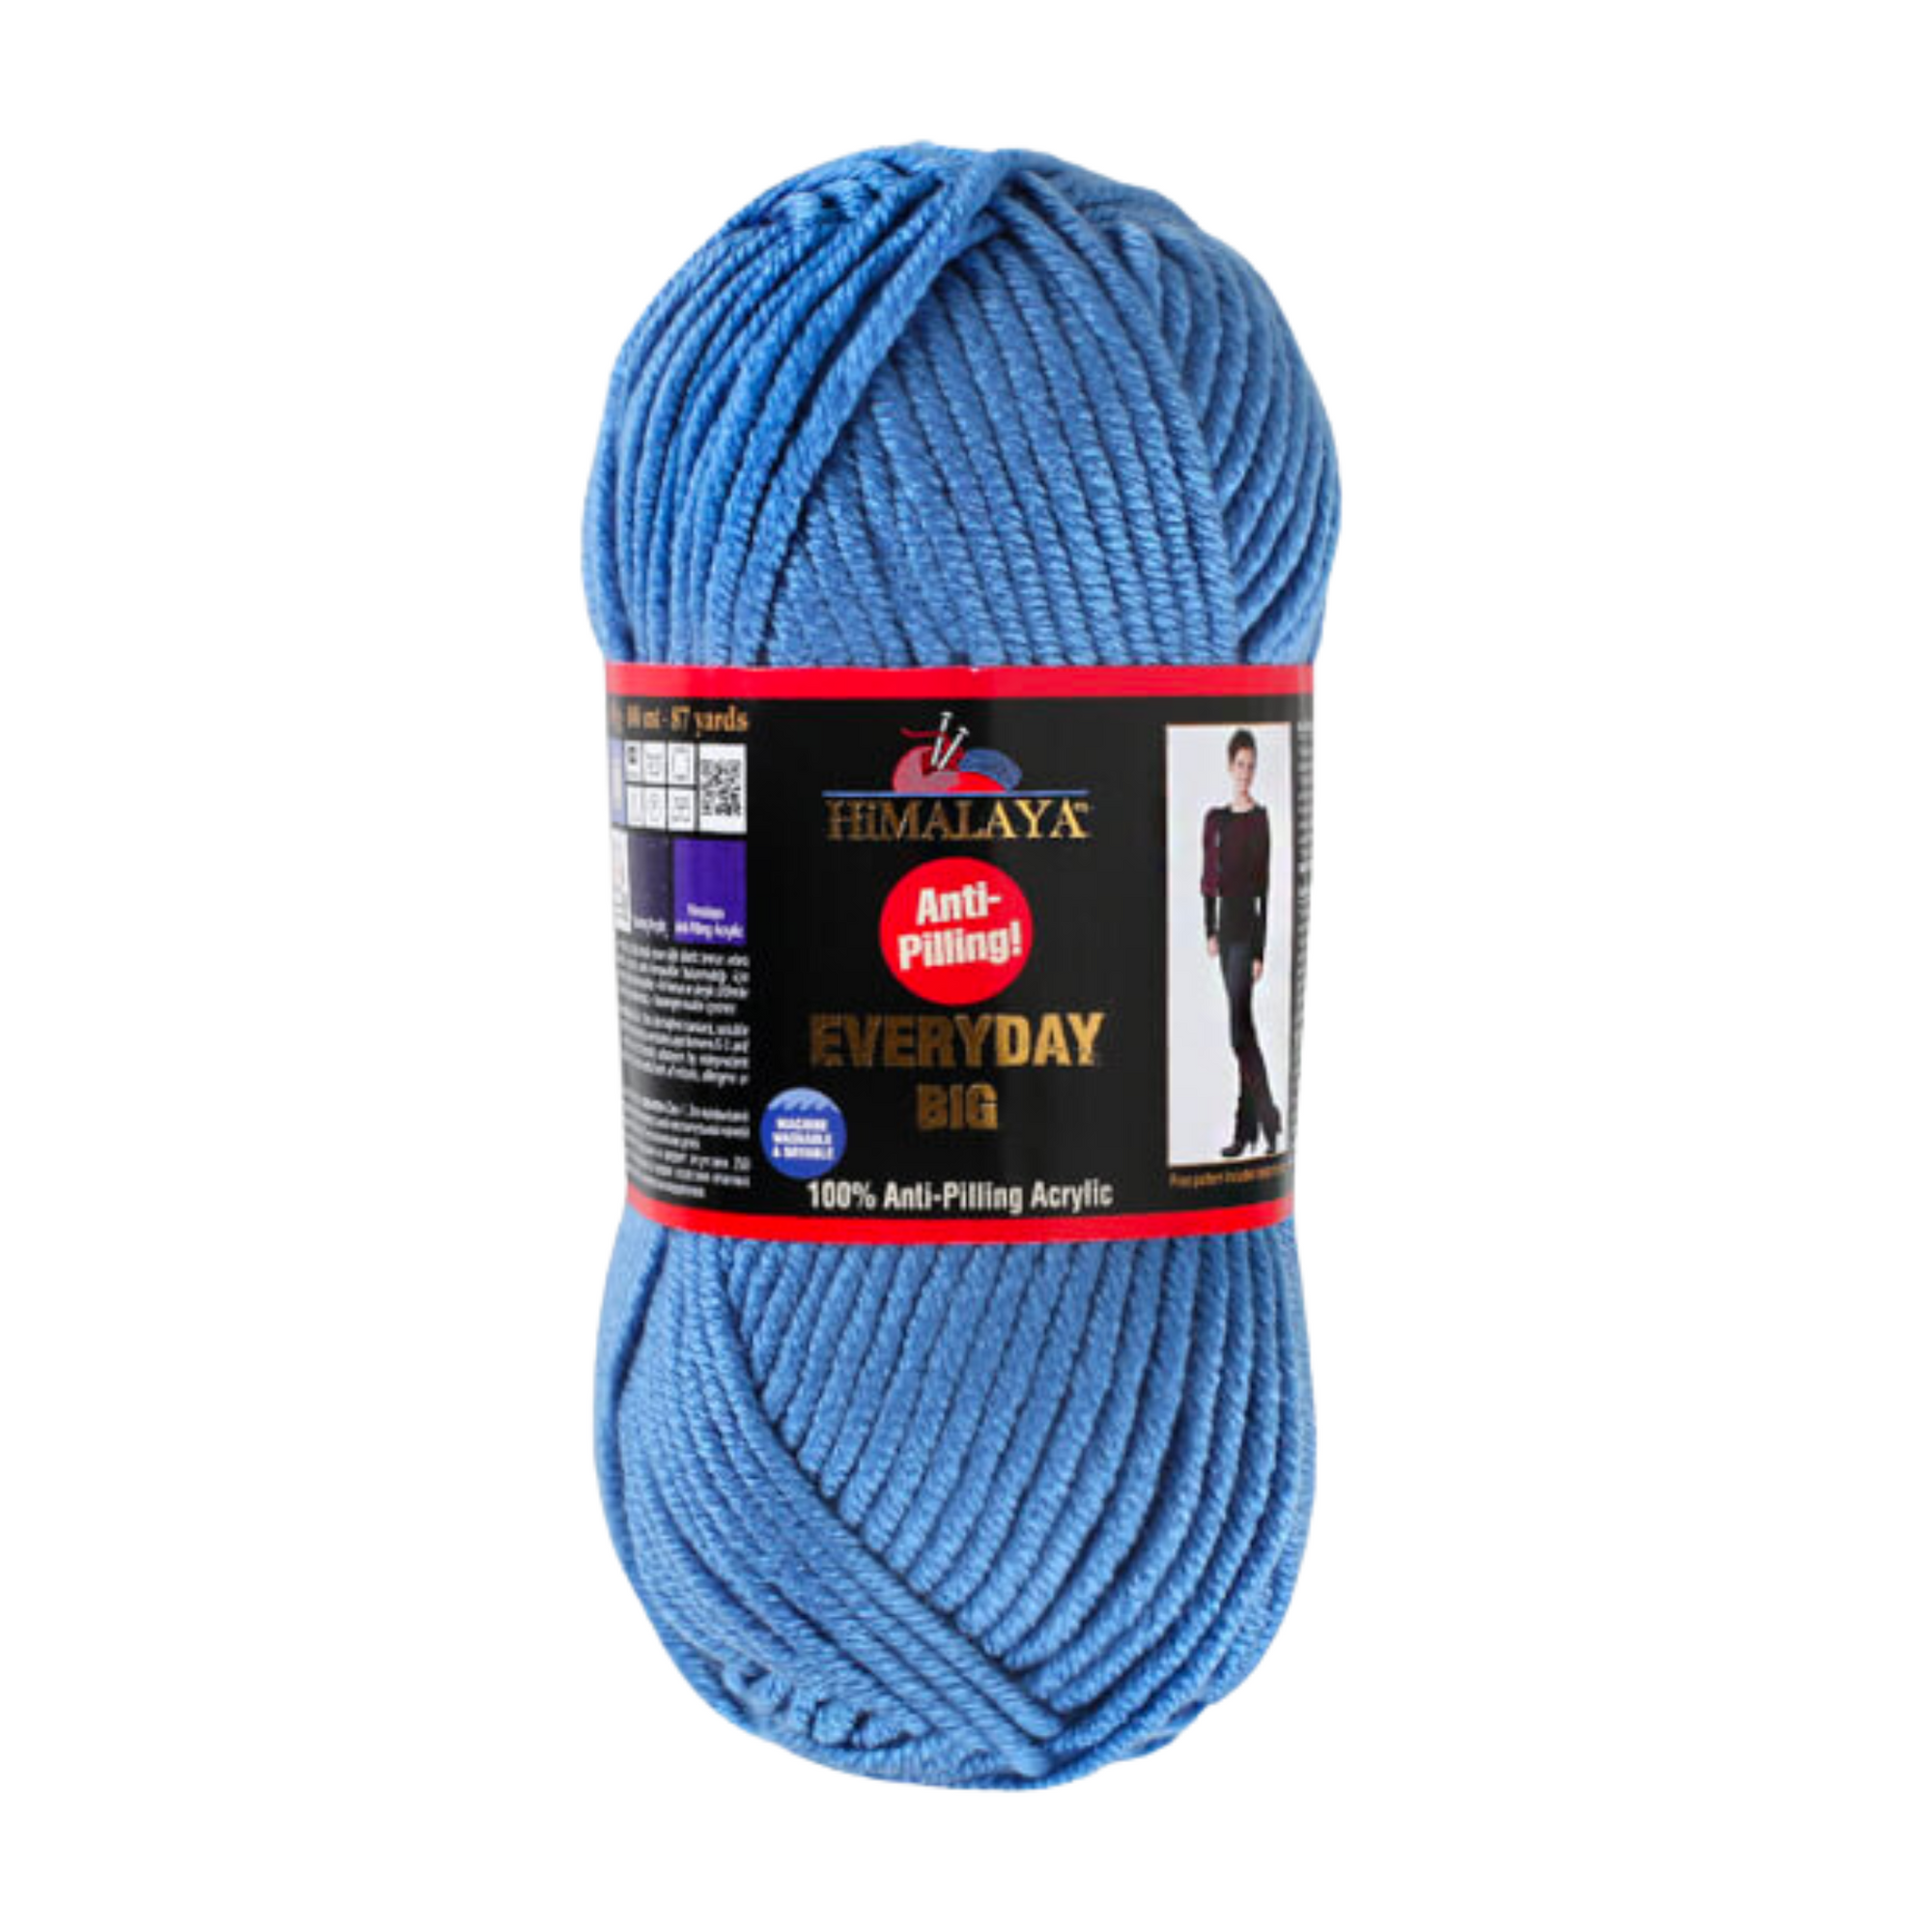 Himalaya Everyday 100% Anti-Pilling Acrylic Yarn, Celestial Blue - 70820